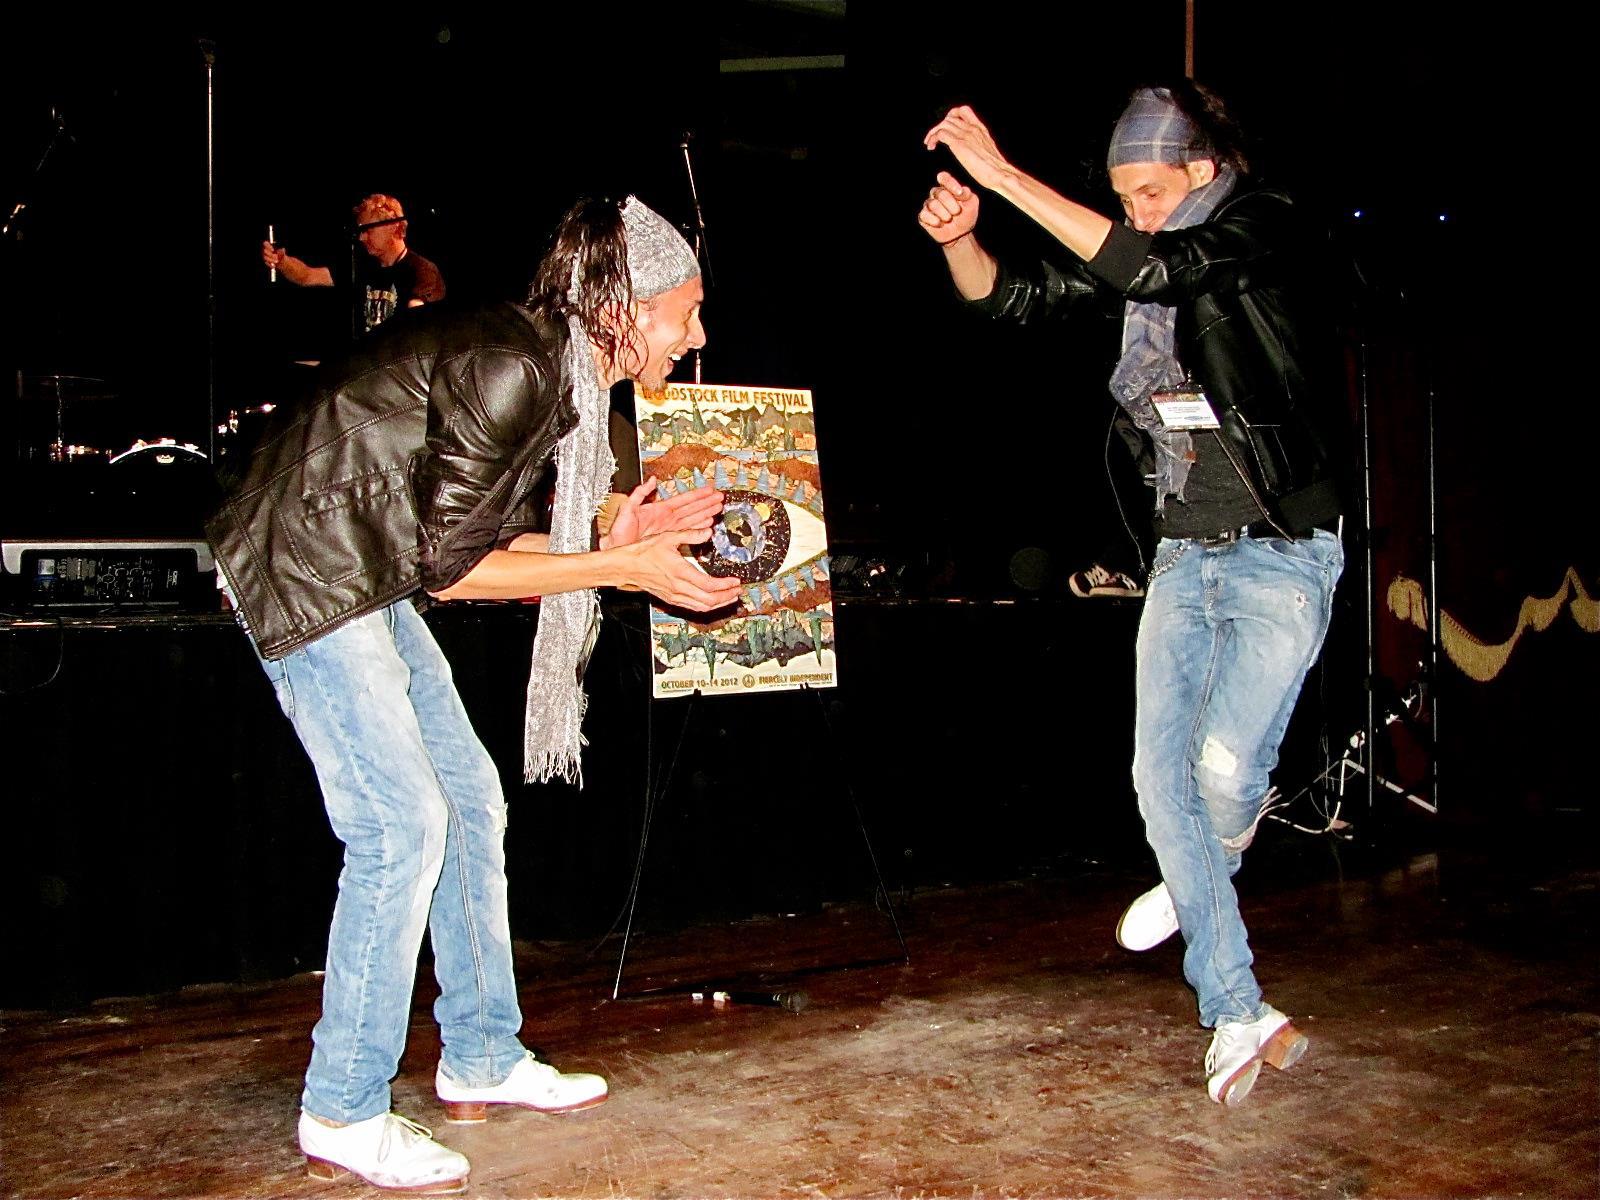 Facundo Lombard & Martín Lombard performing at Woodstock Film Festival 2012